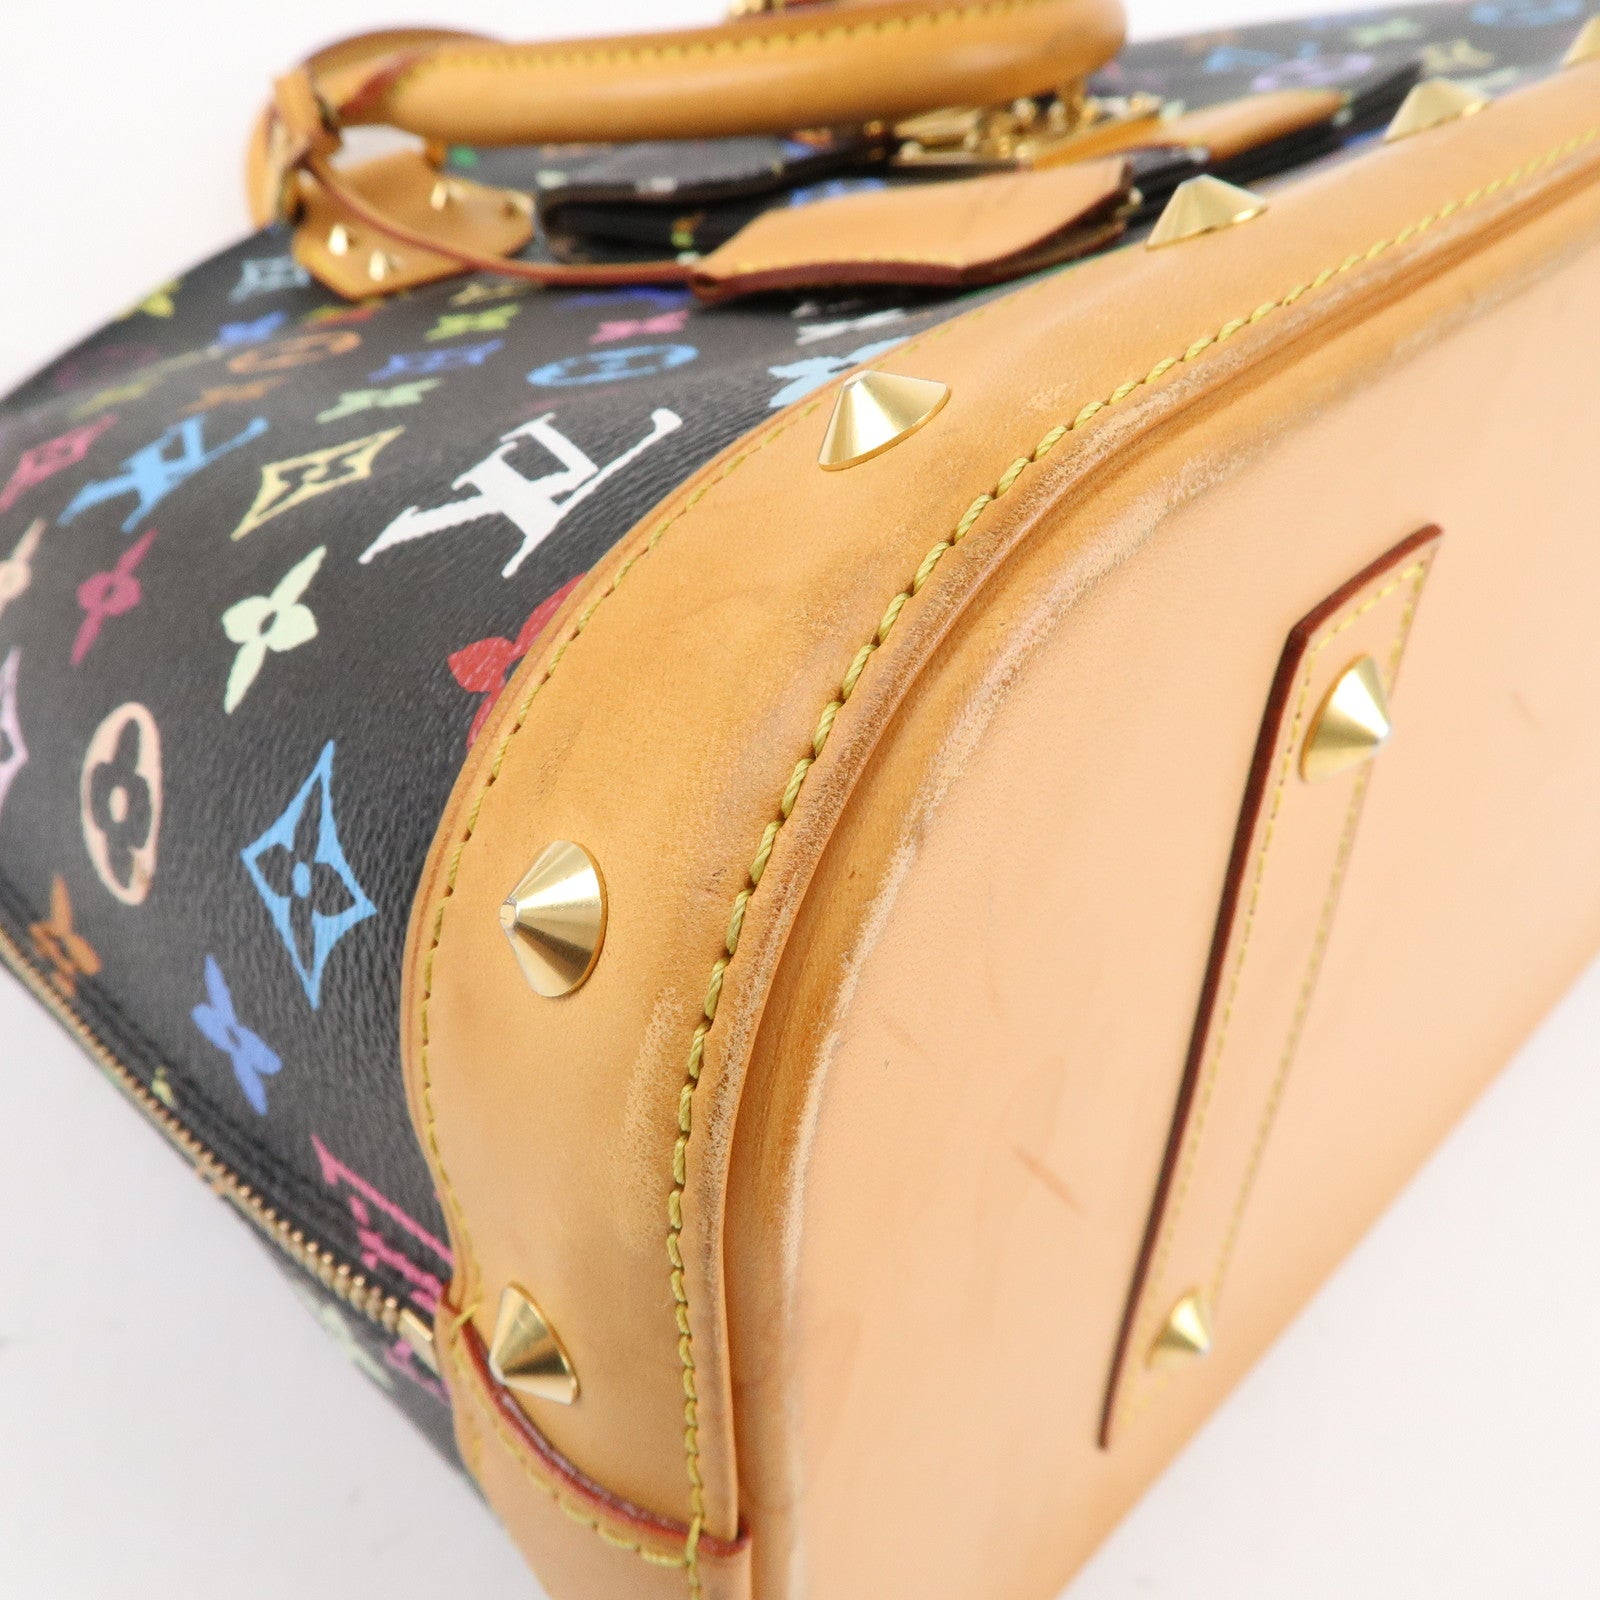 Purse Review 1: Louis Vuitton Multicolor Alma Handbag 